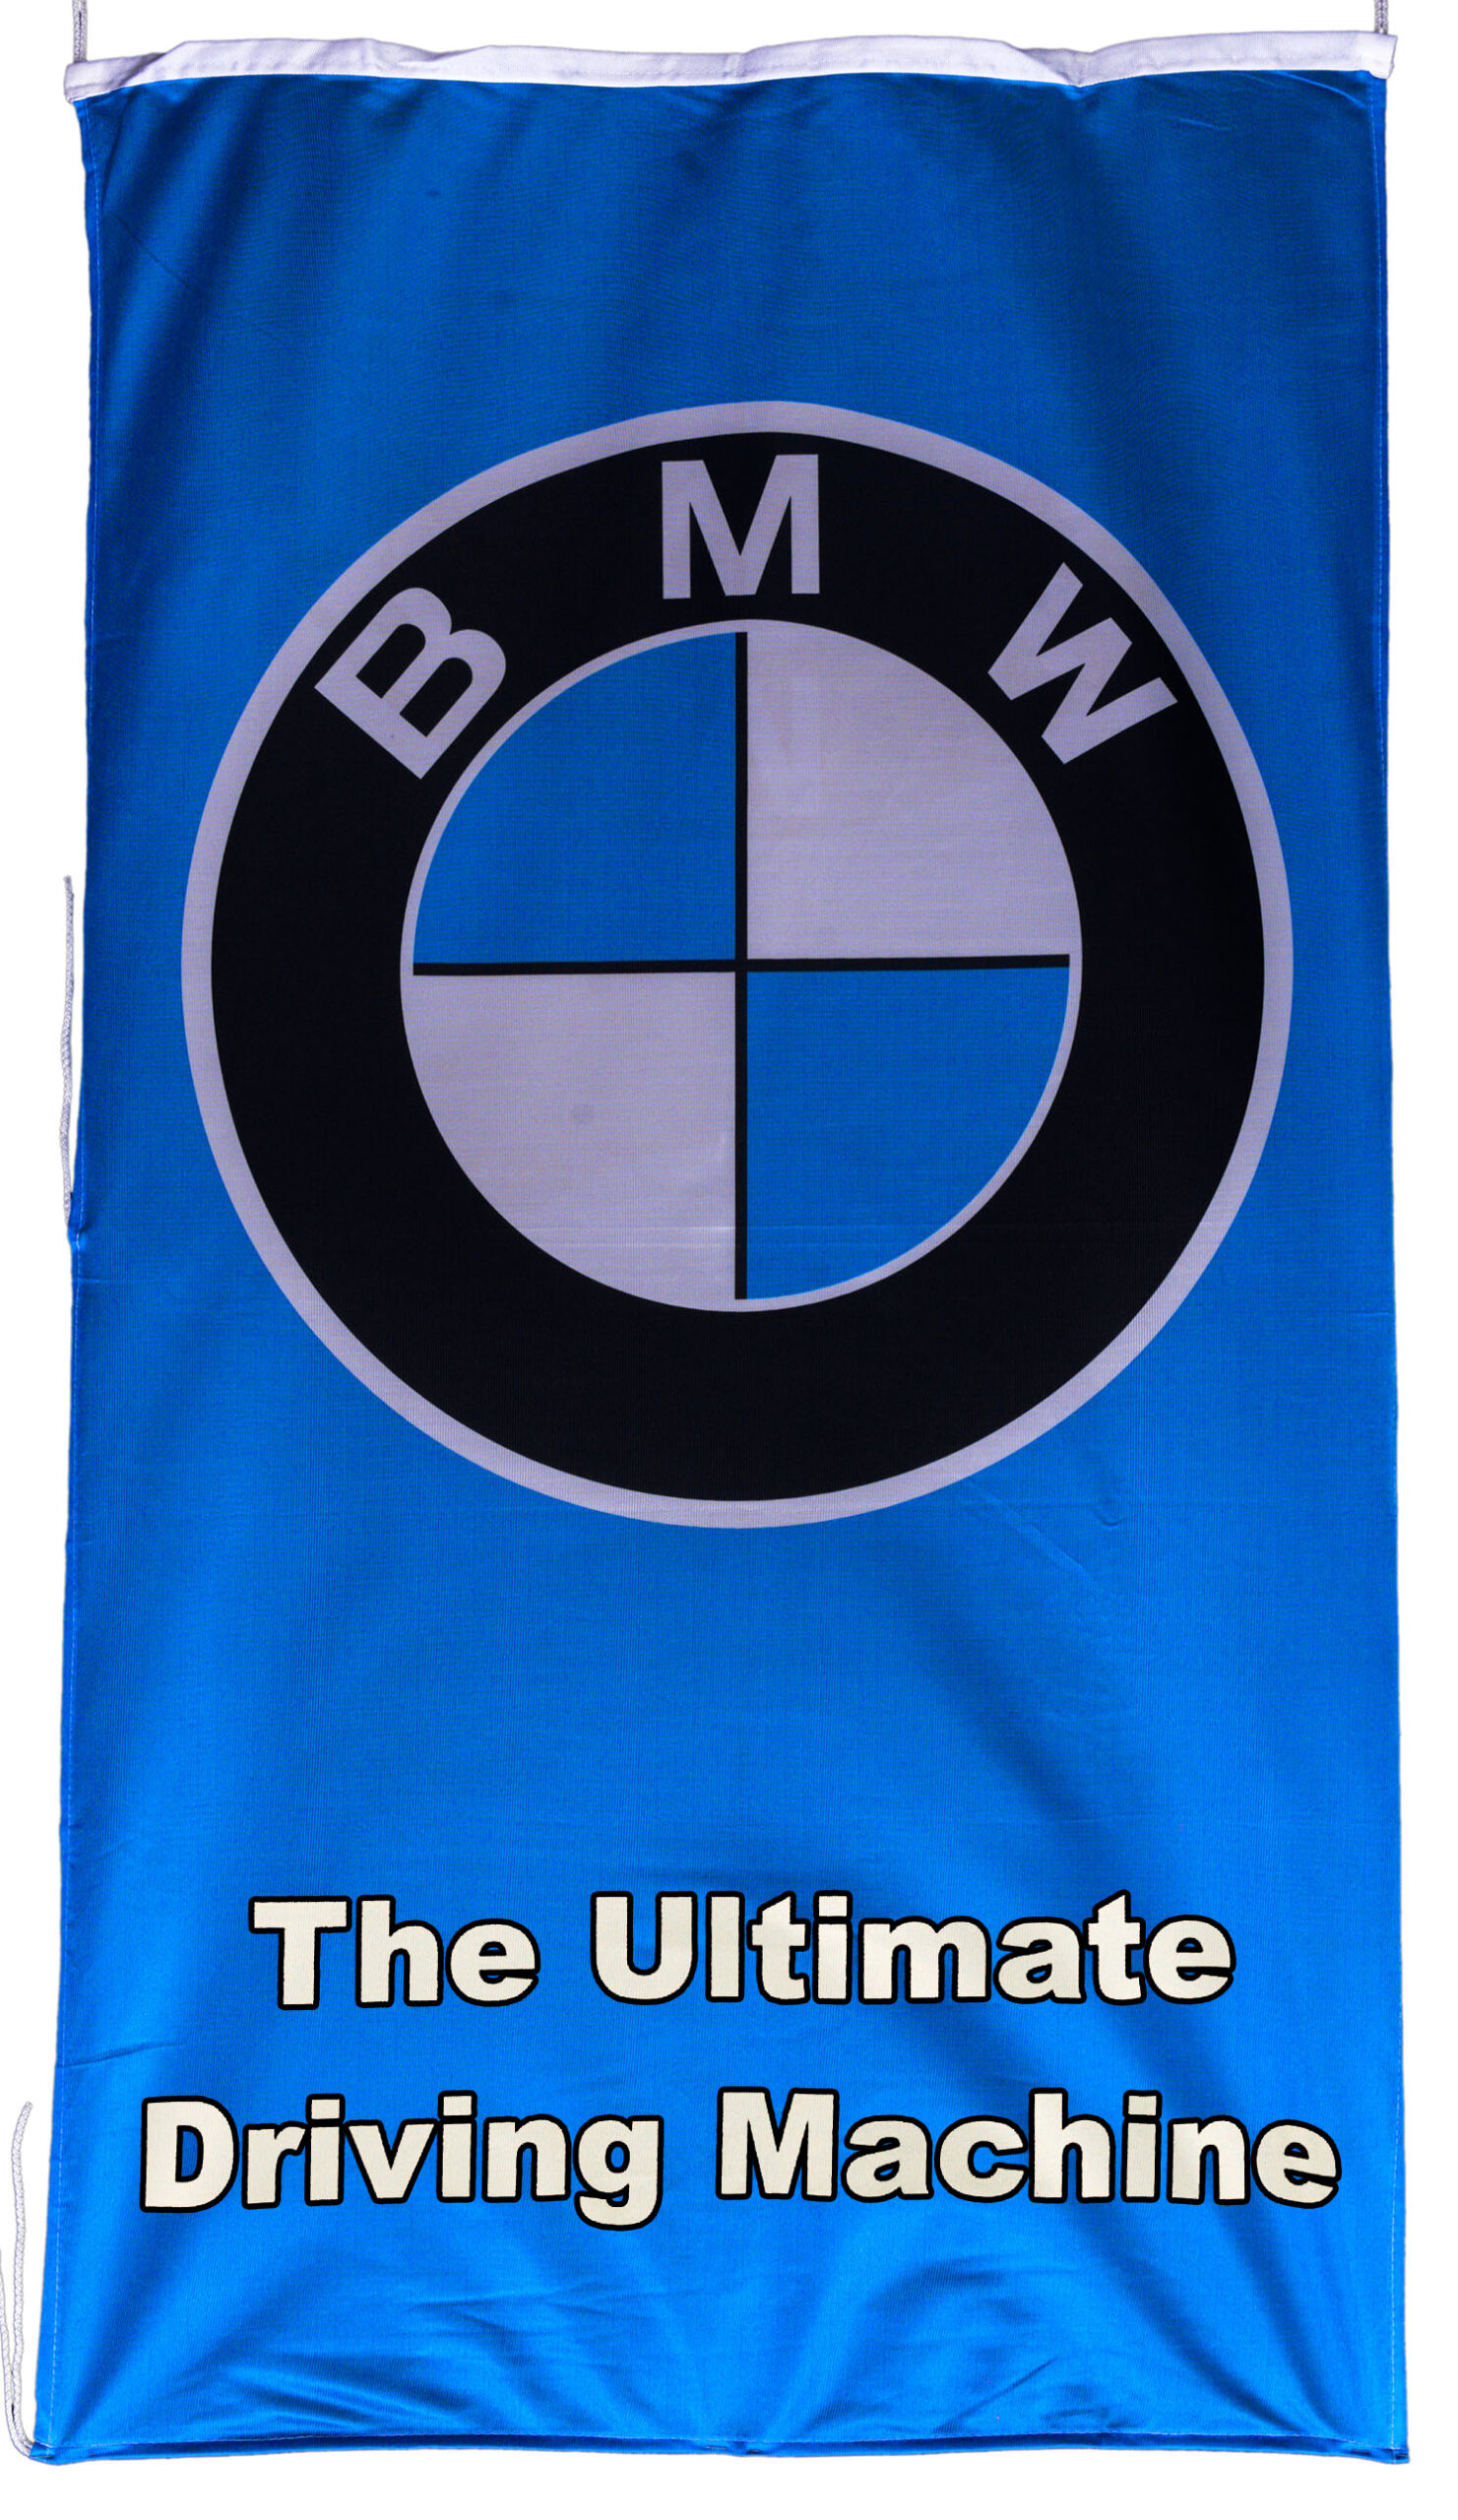 Fahne Flagge Banner Flag BMW M POWER M3 GT  90 X 150 cm NEU+ORIGINAL VERPACKT 